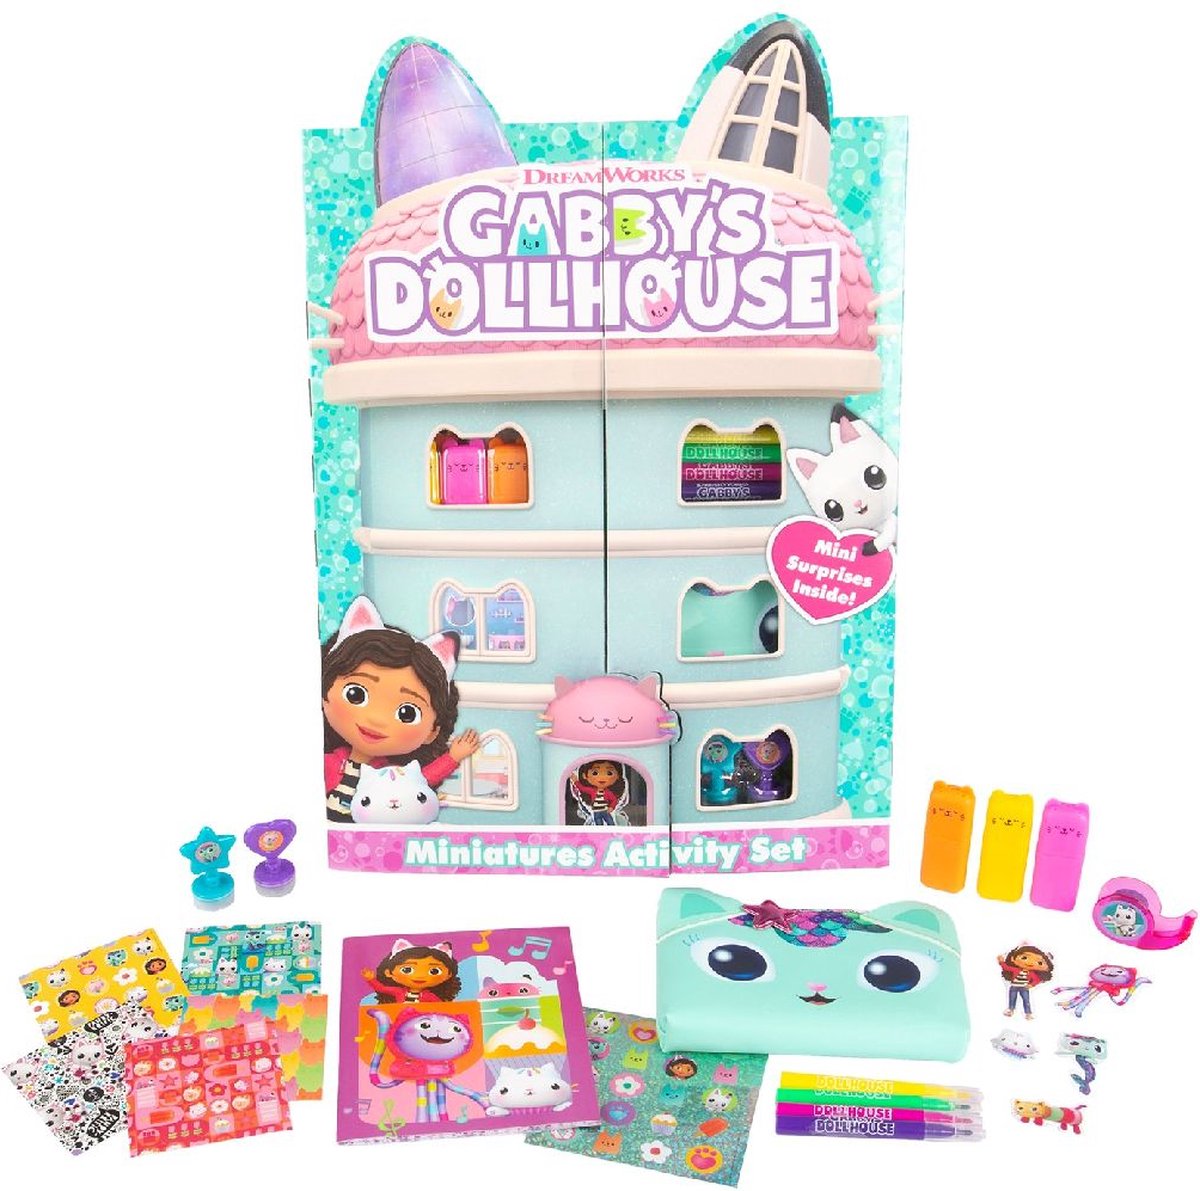 Gabby's Dollhouse - My own creativity set Danawares doll